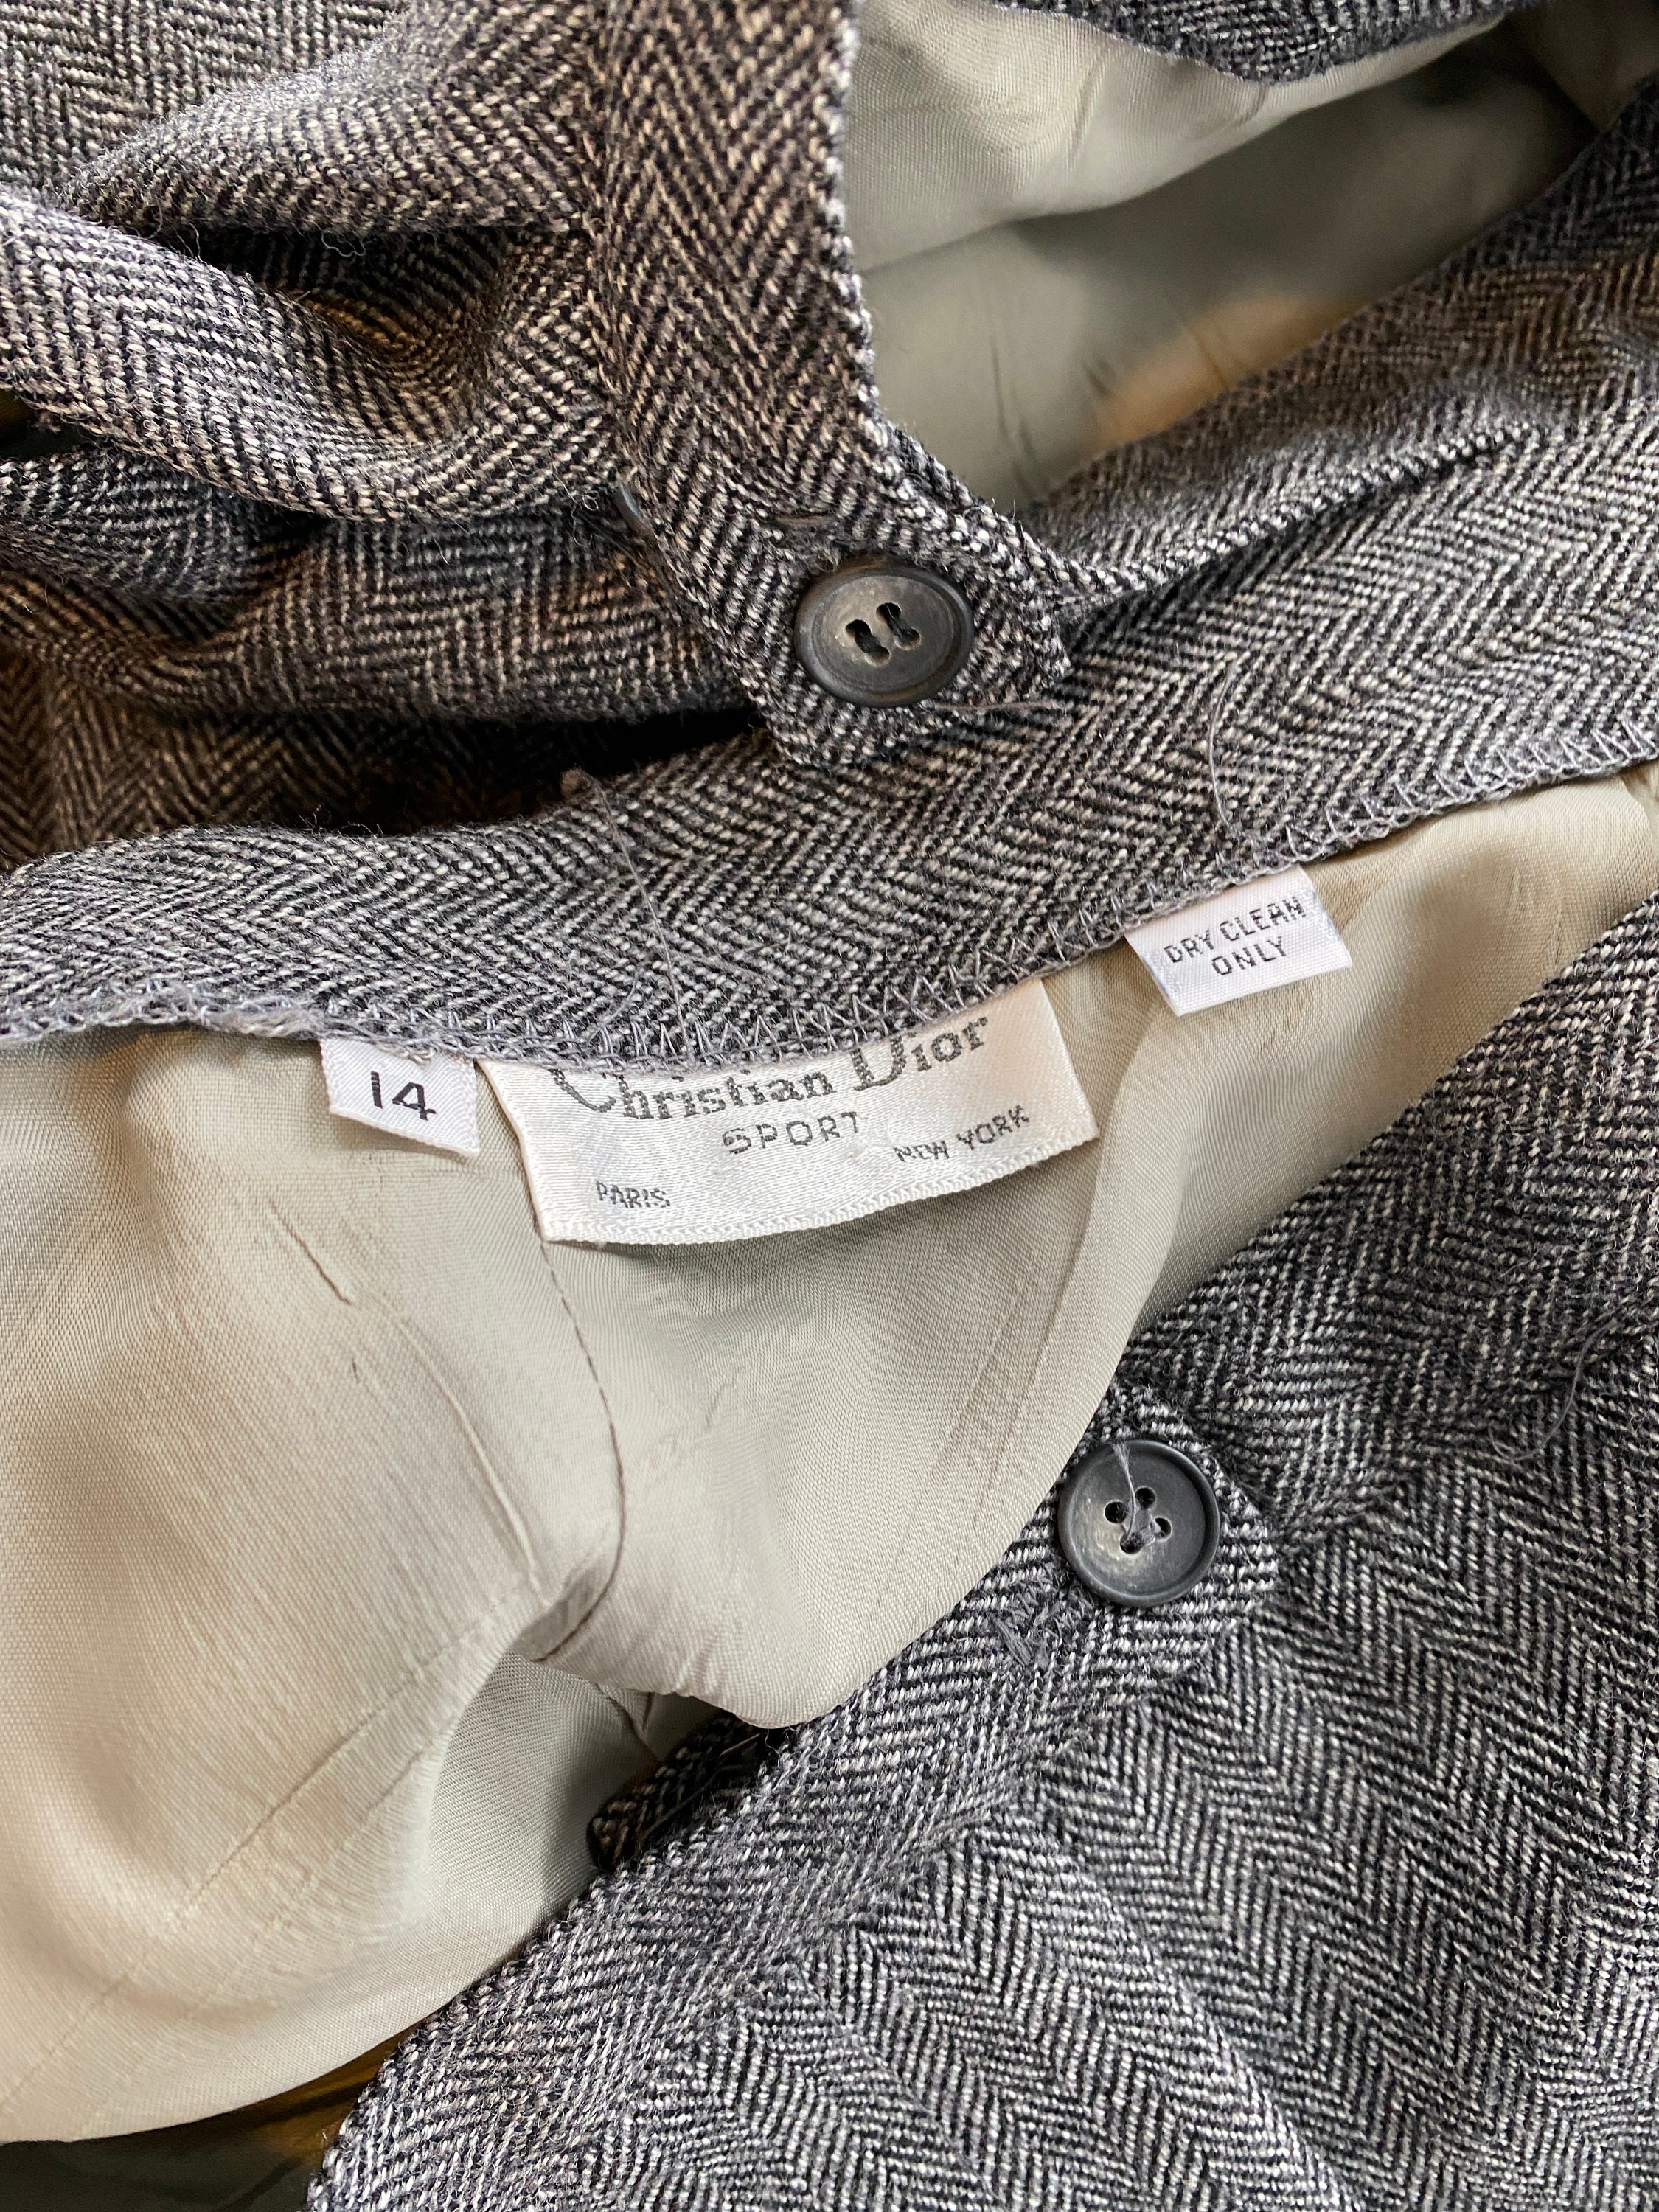 Christian Dior SPORTS Wool Shorts Khaki-green M